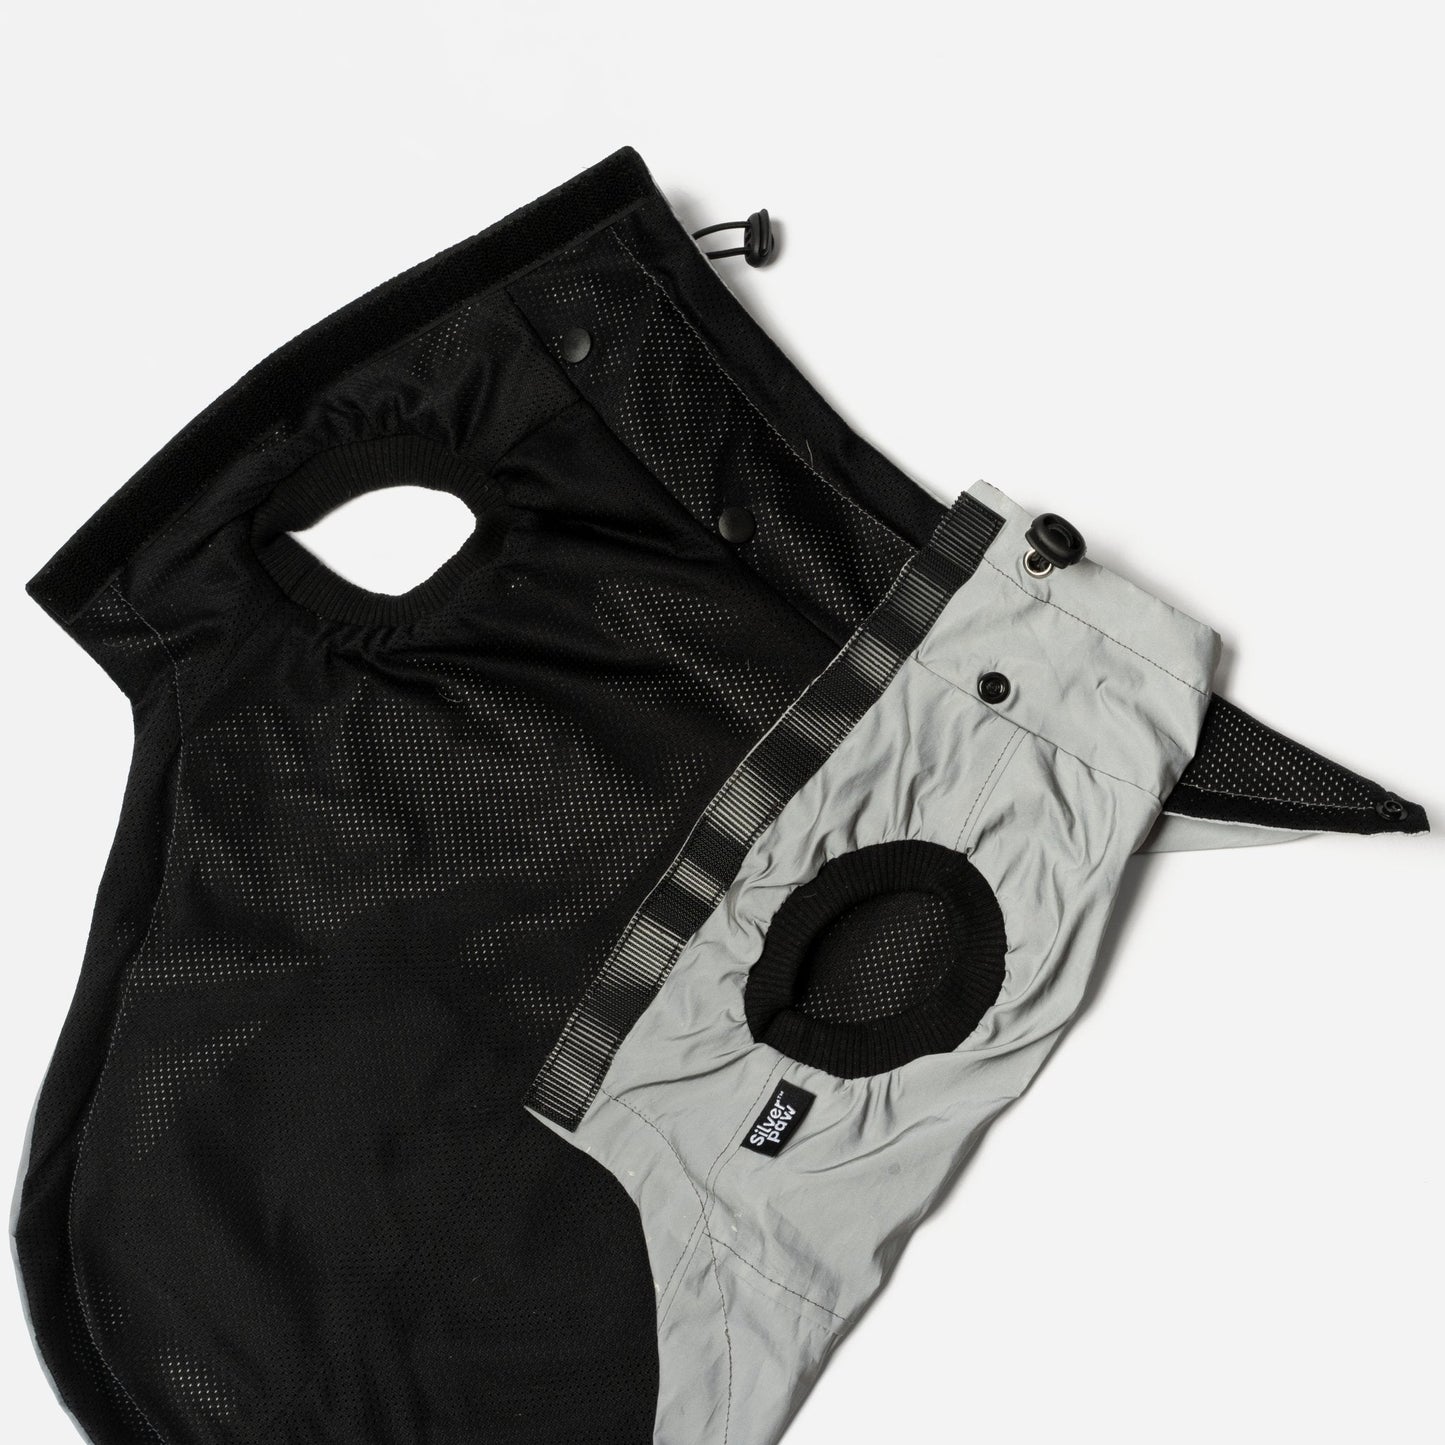 Bundle Max - Reflective Raincoat + Life Jacket - Silver Paw